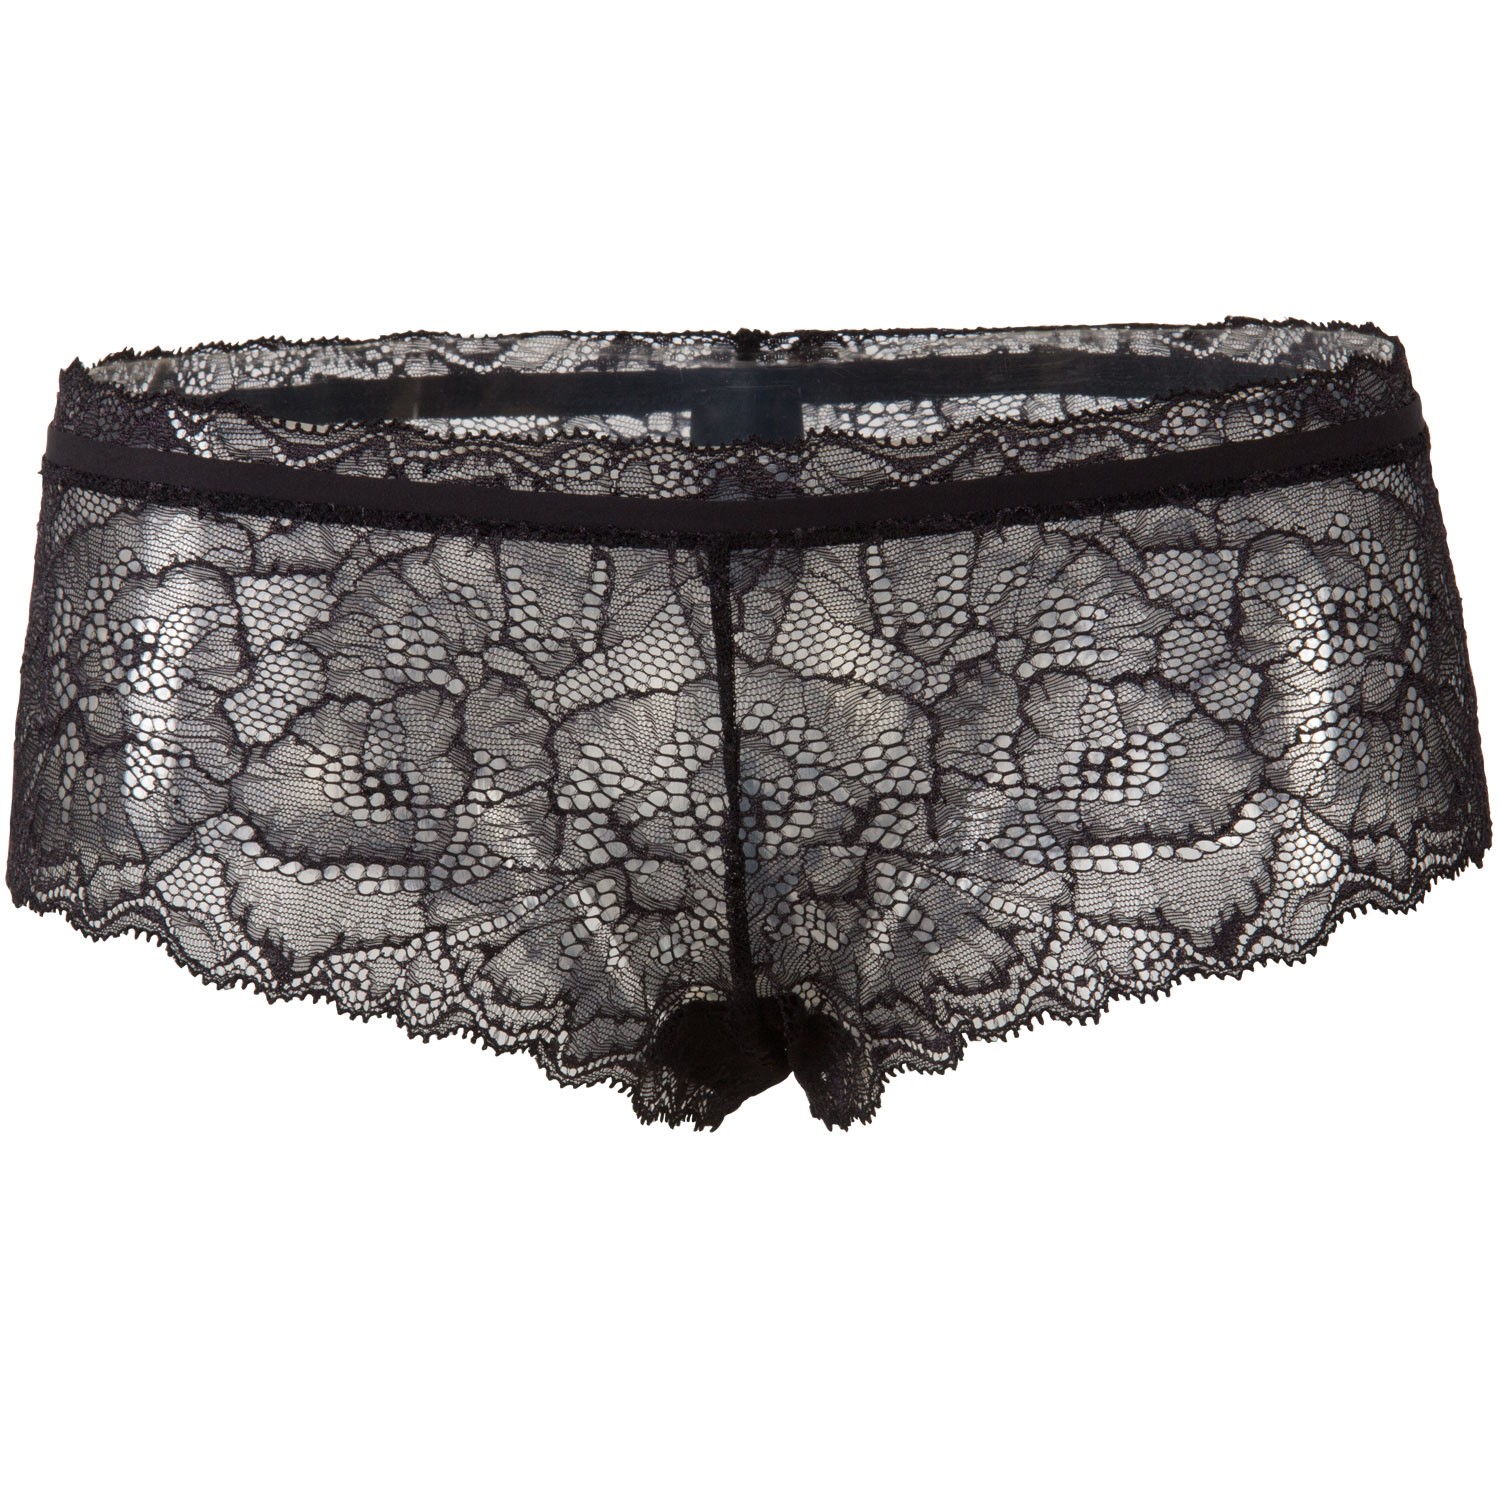 Underwear and Sport bras online - Timarco.co.uk